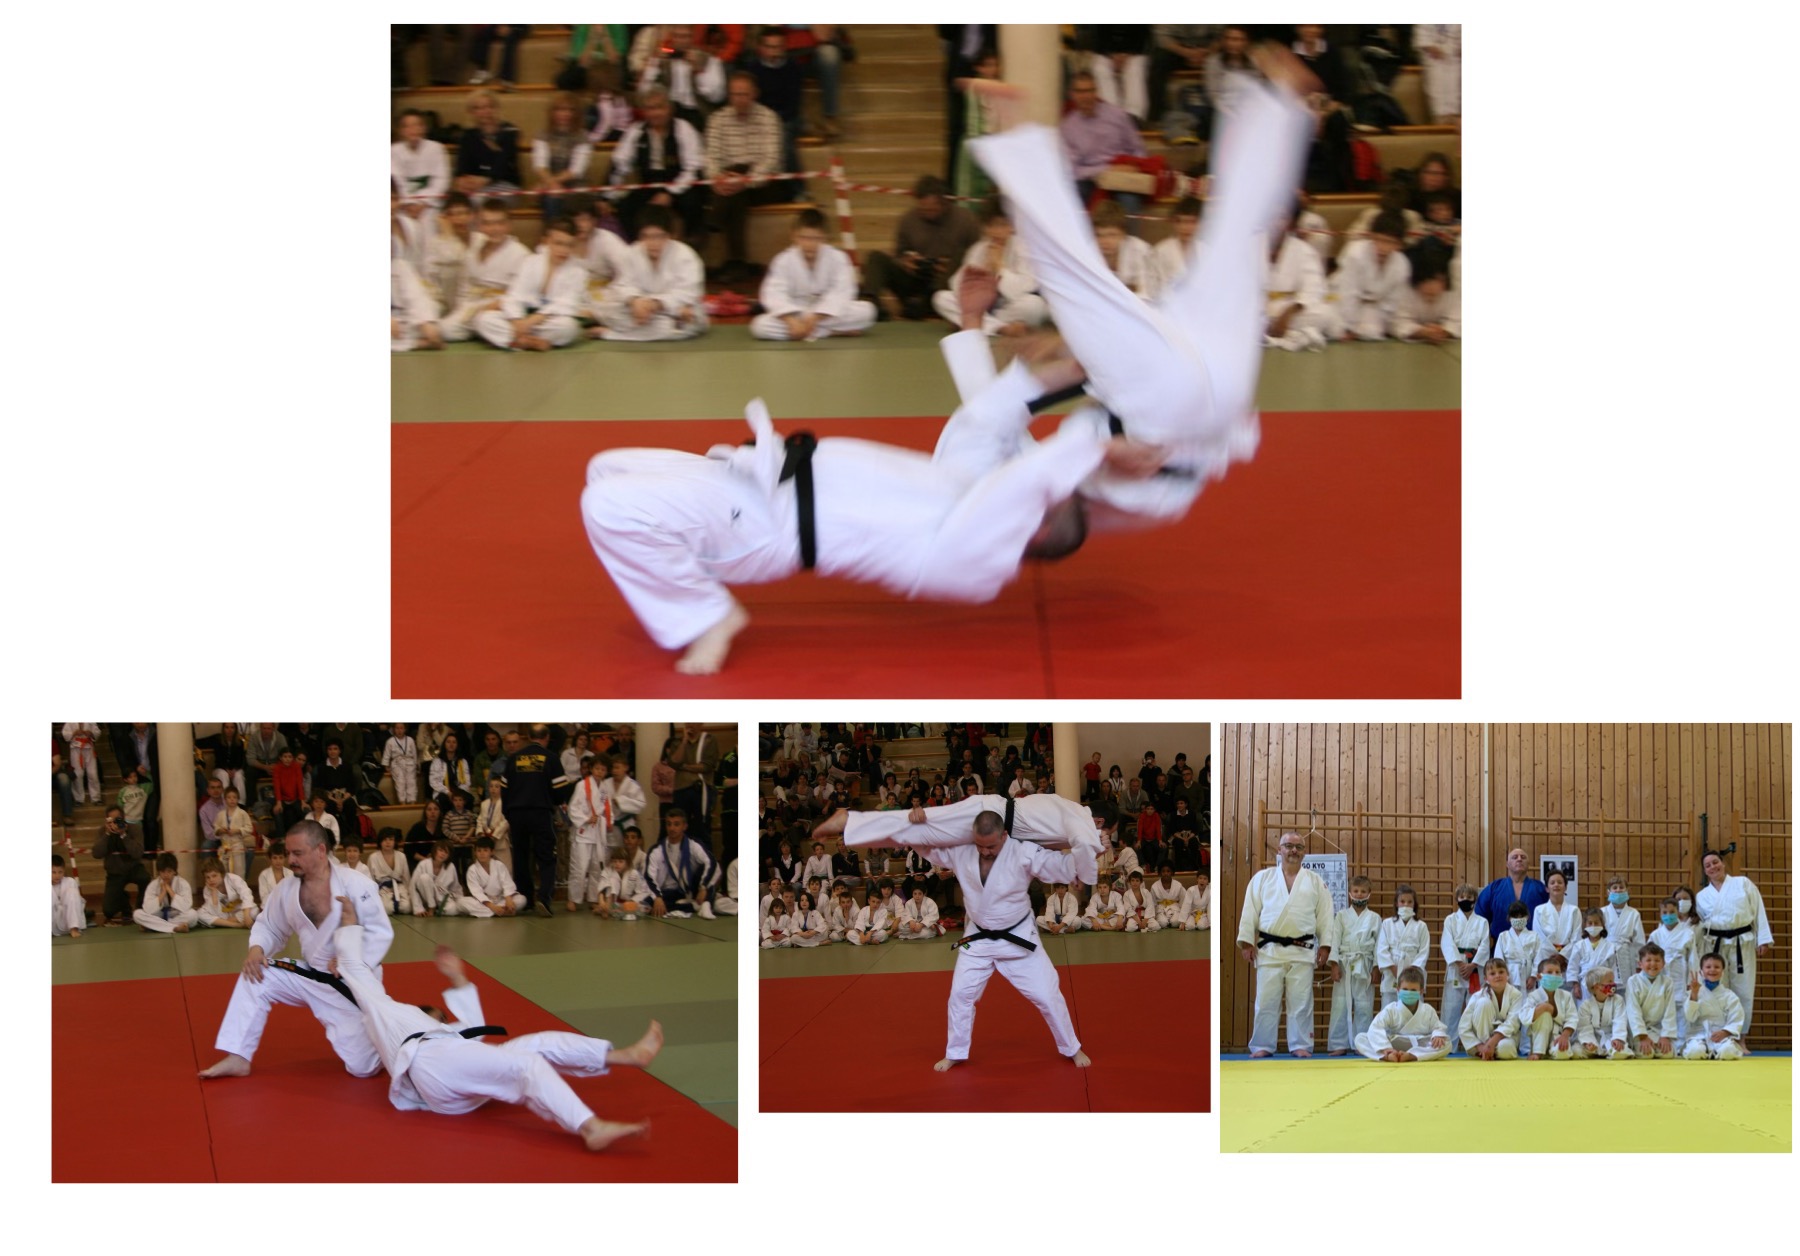 Alessandro visintini judo